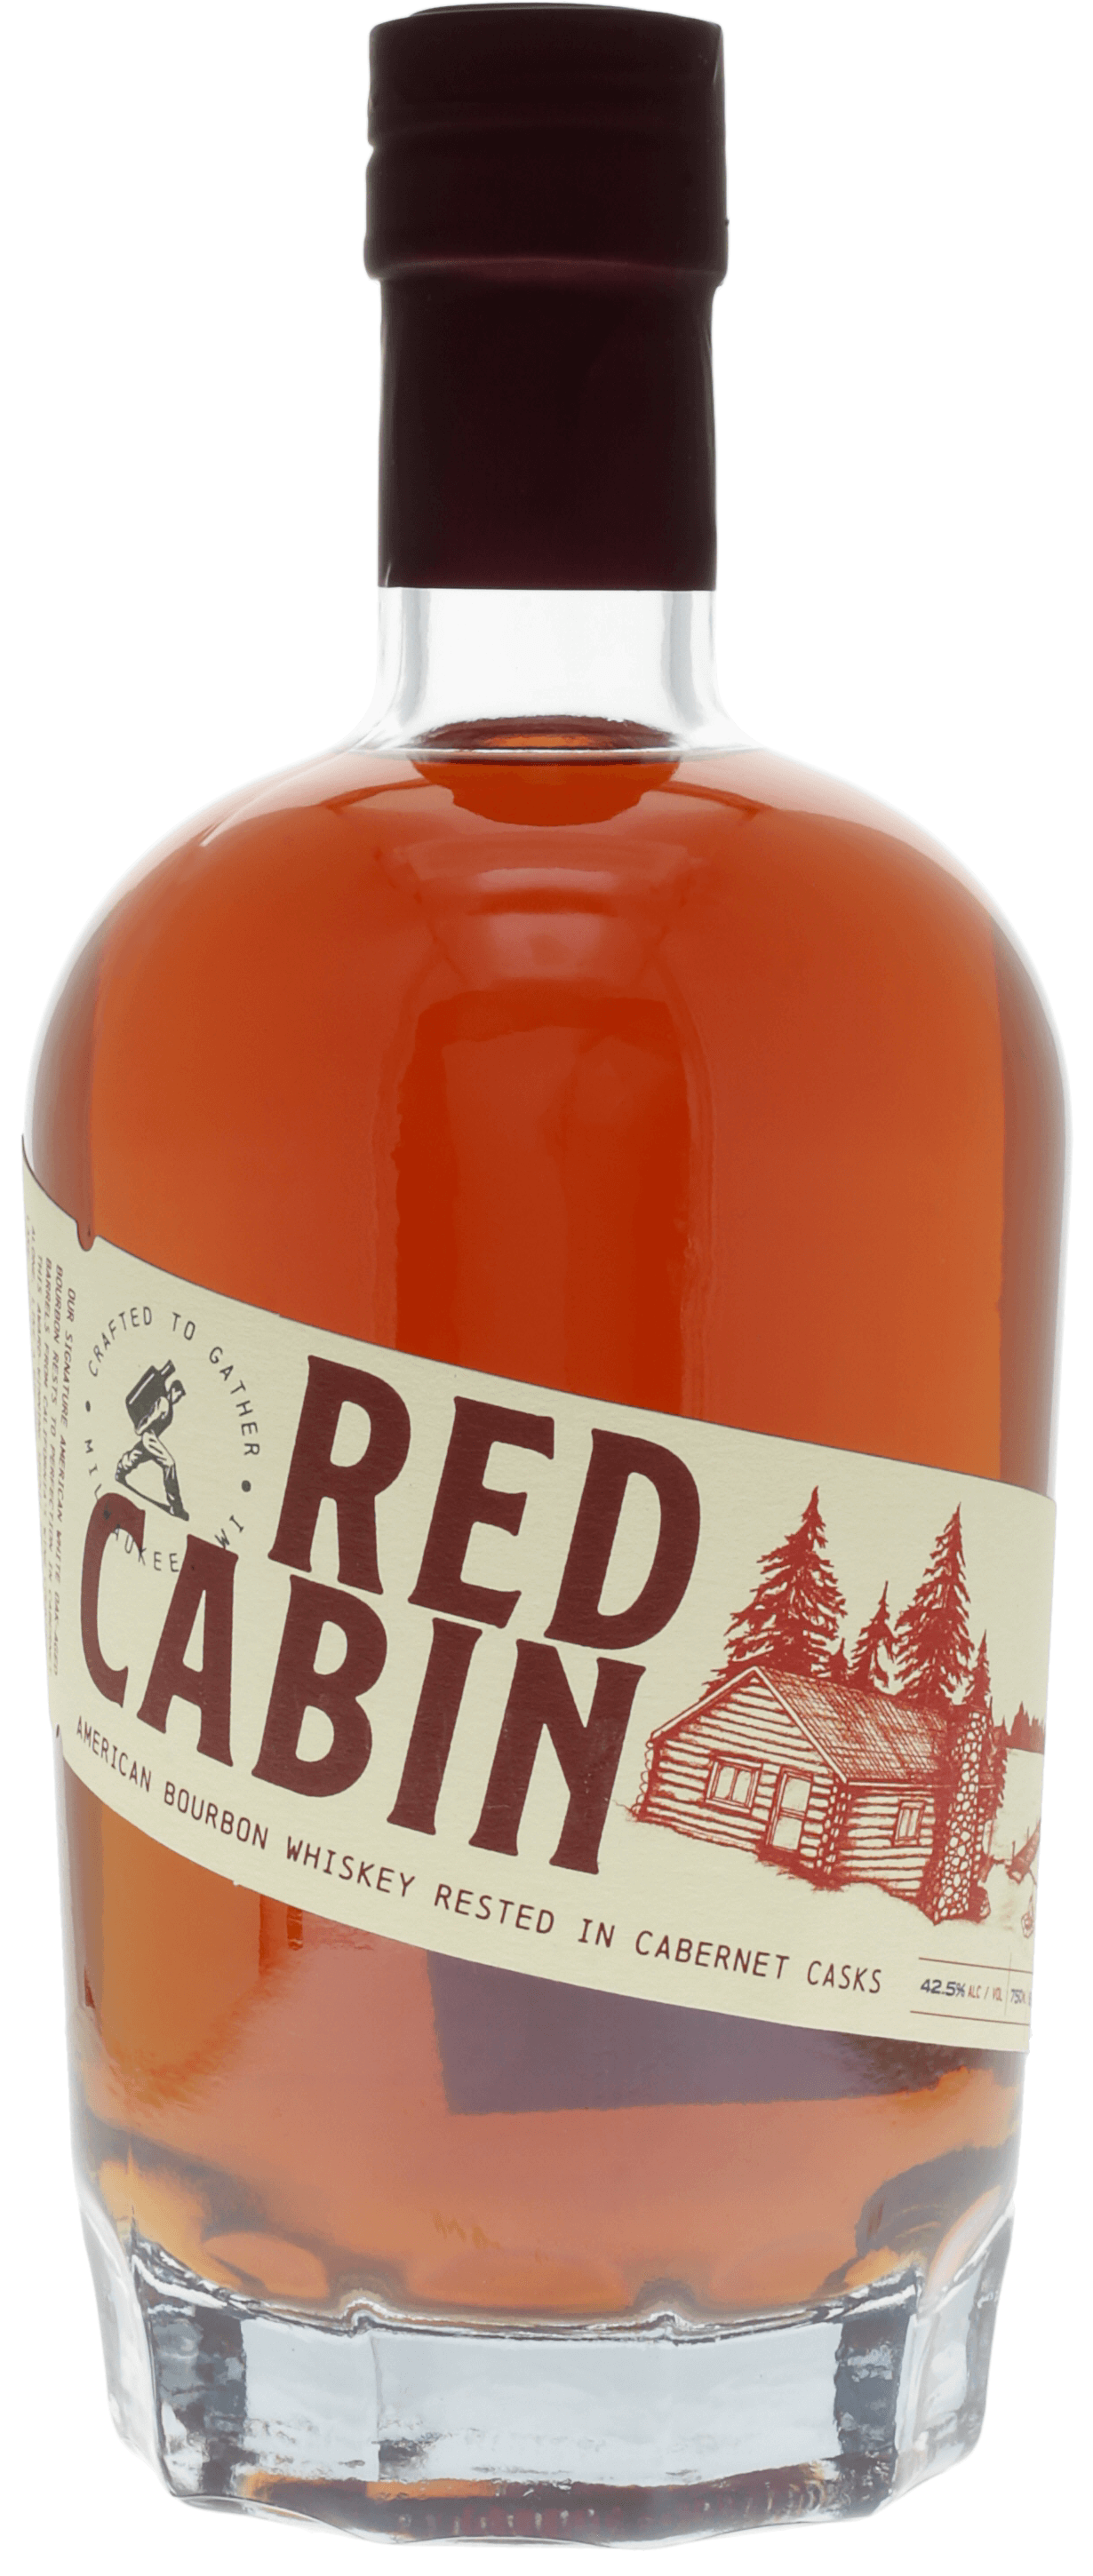 Red Cabin Bourbon